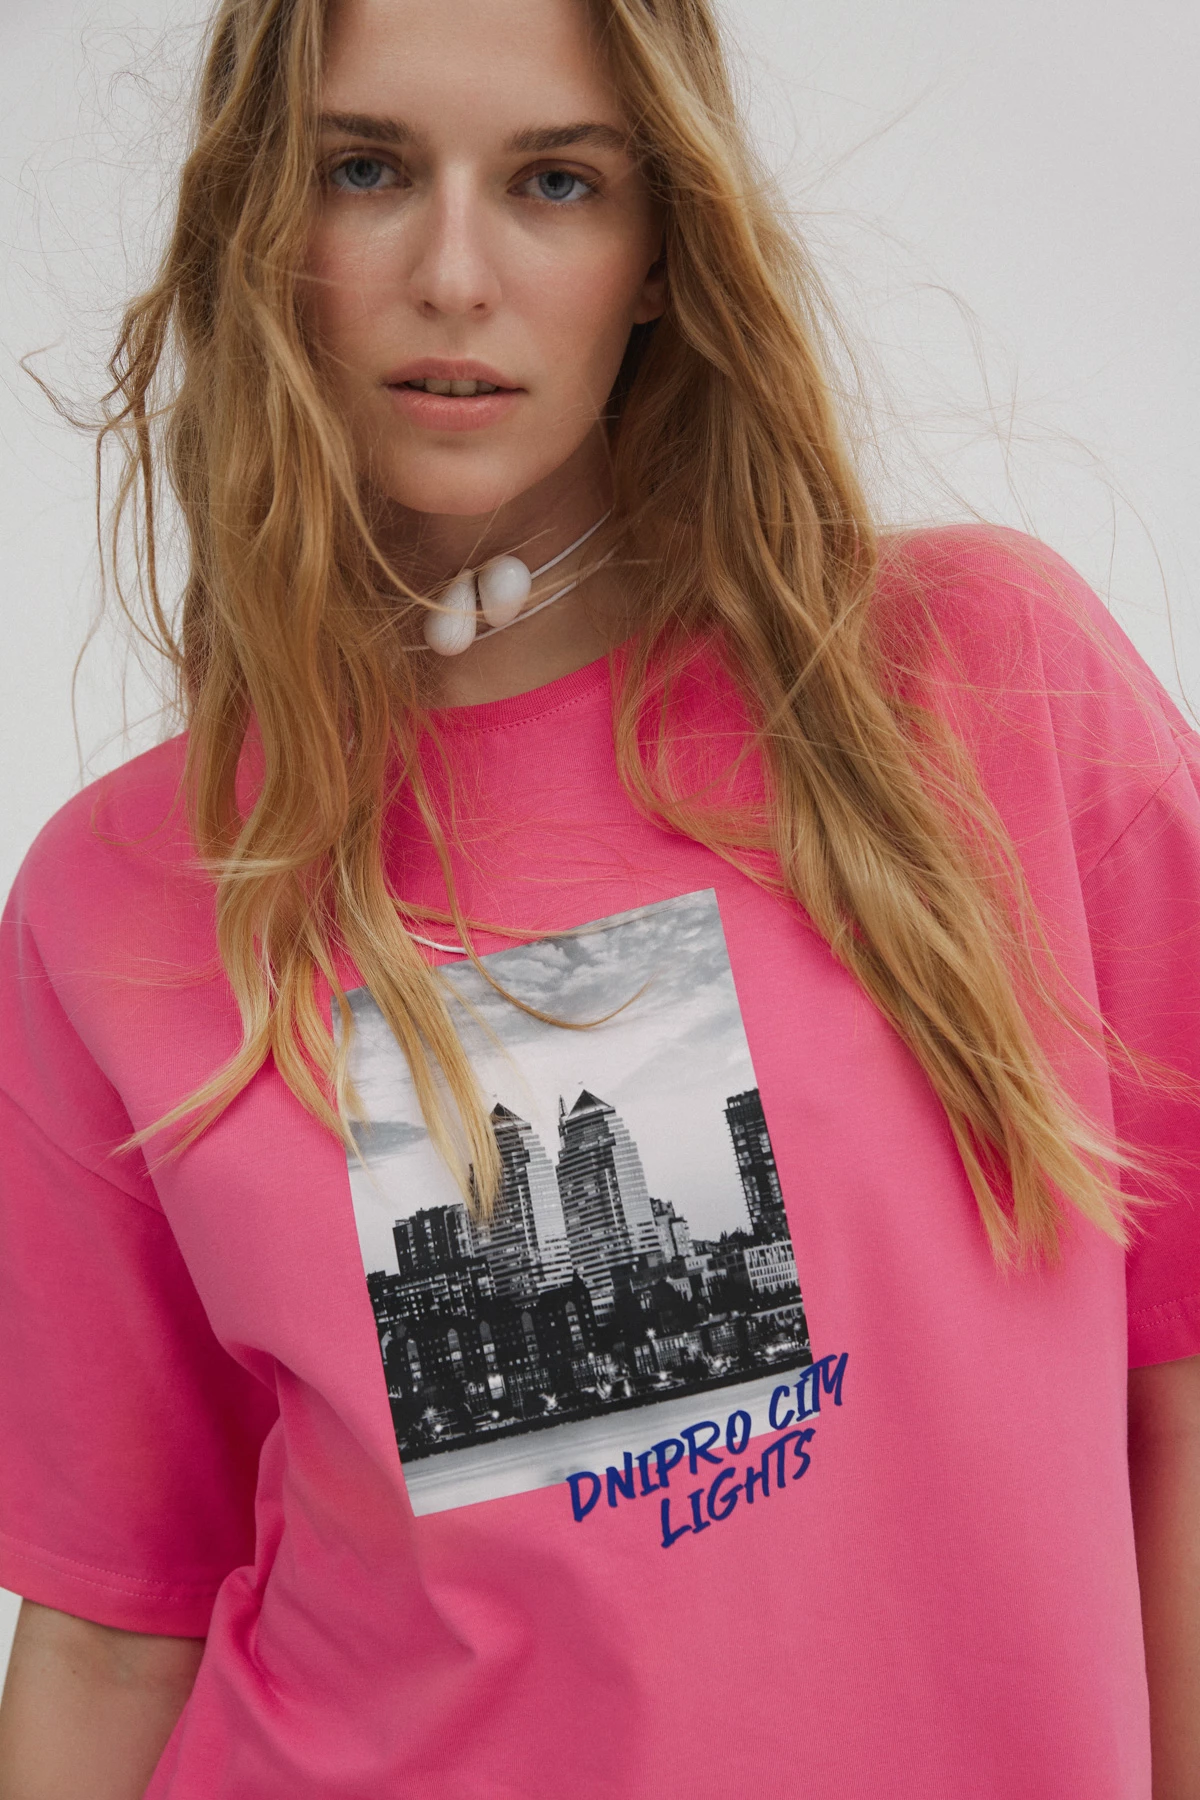 Pink oversize cotton T-shirt "Dnipro city lights", photo 5